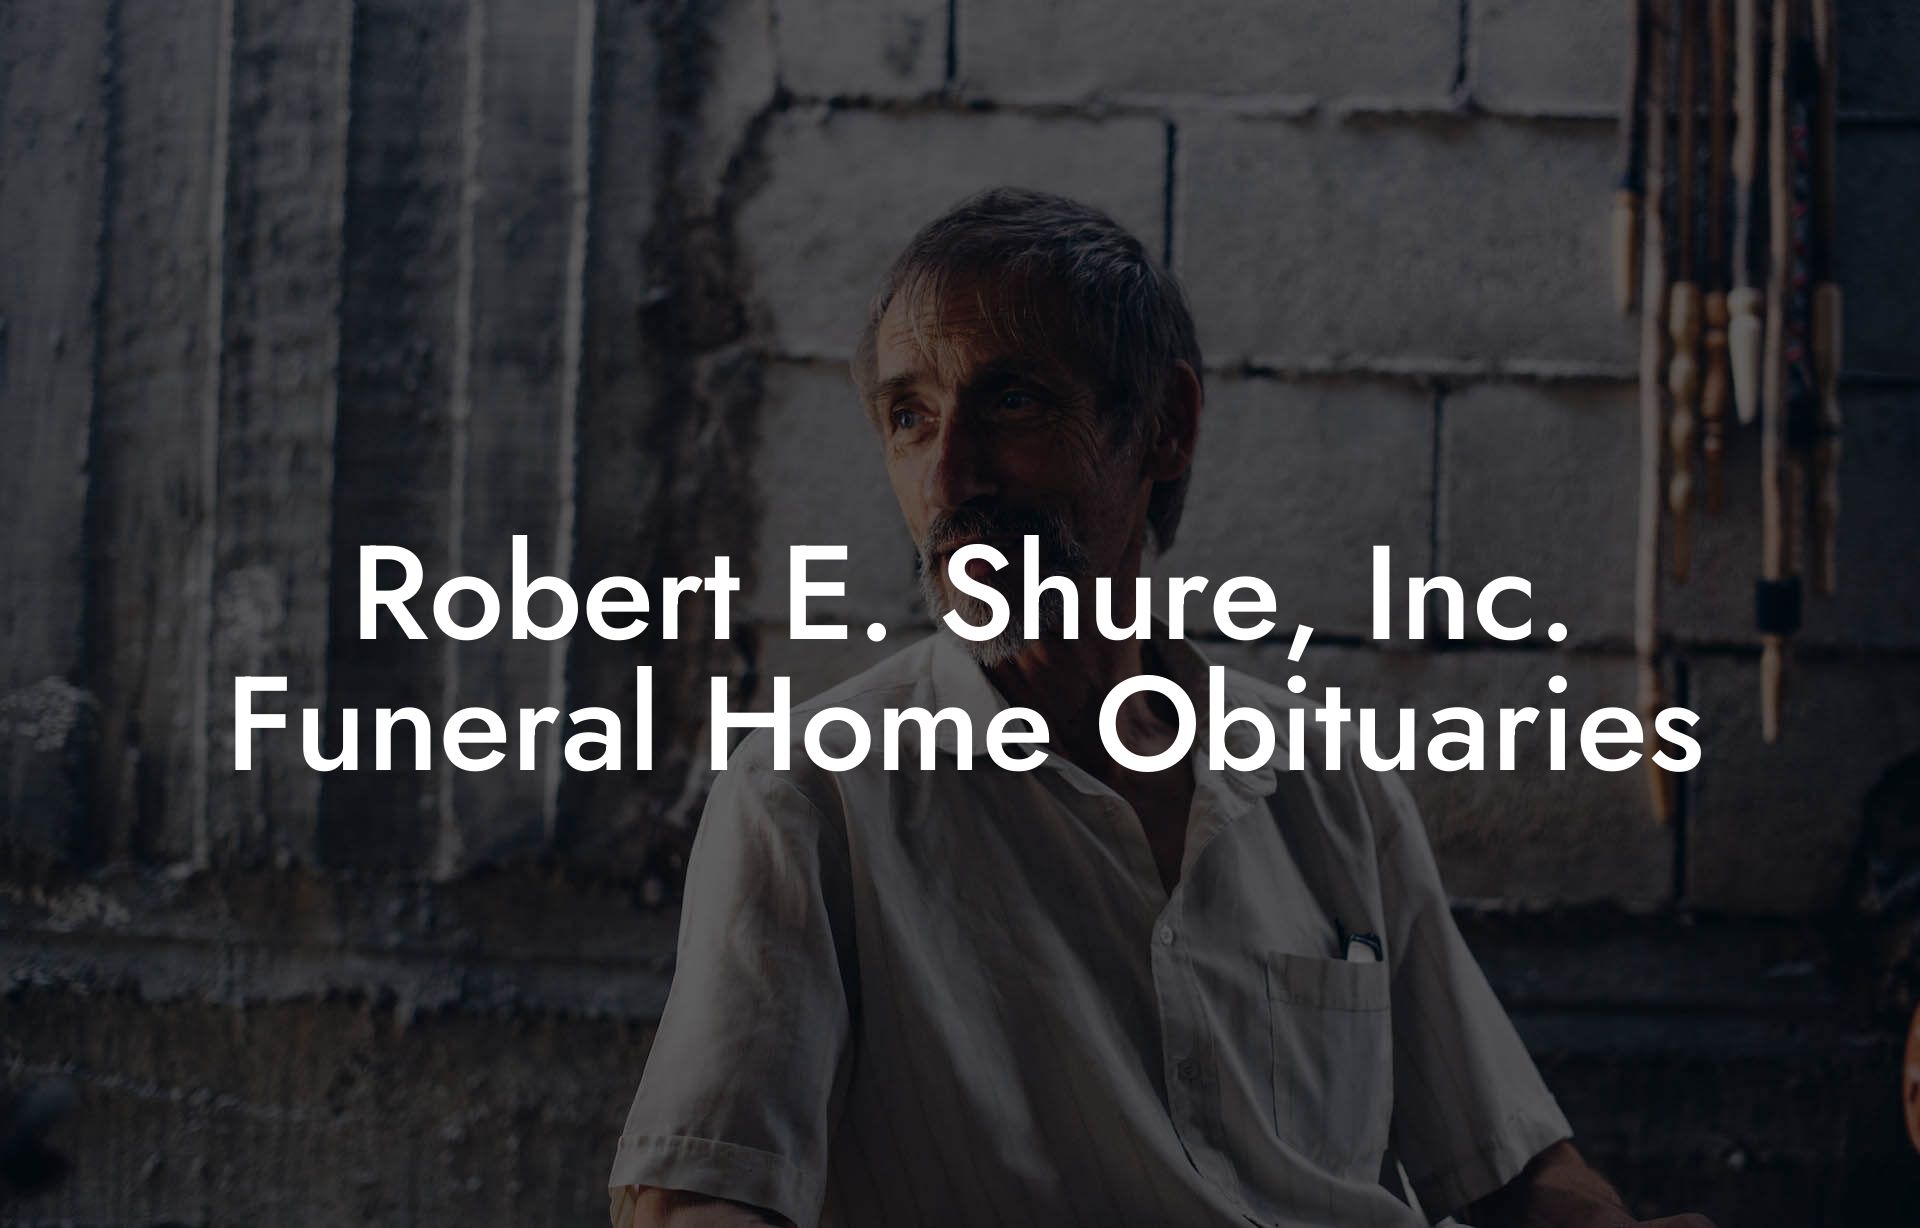 Robert E. Shure, Inc. Funeral Home Obituaries